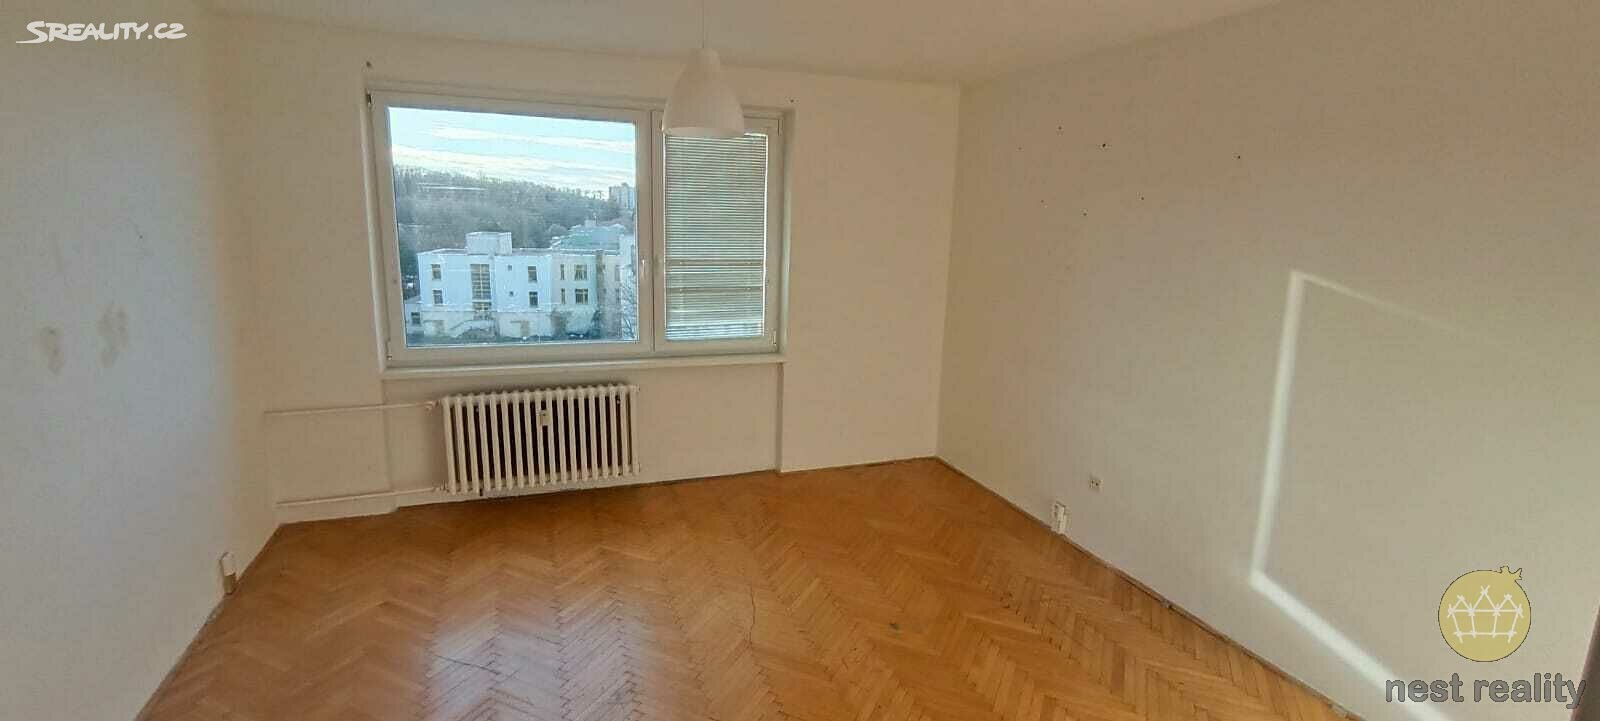 Prodej bytu 1+1 39 m², Chvatěrubská, Praha 8 - Čimice